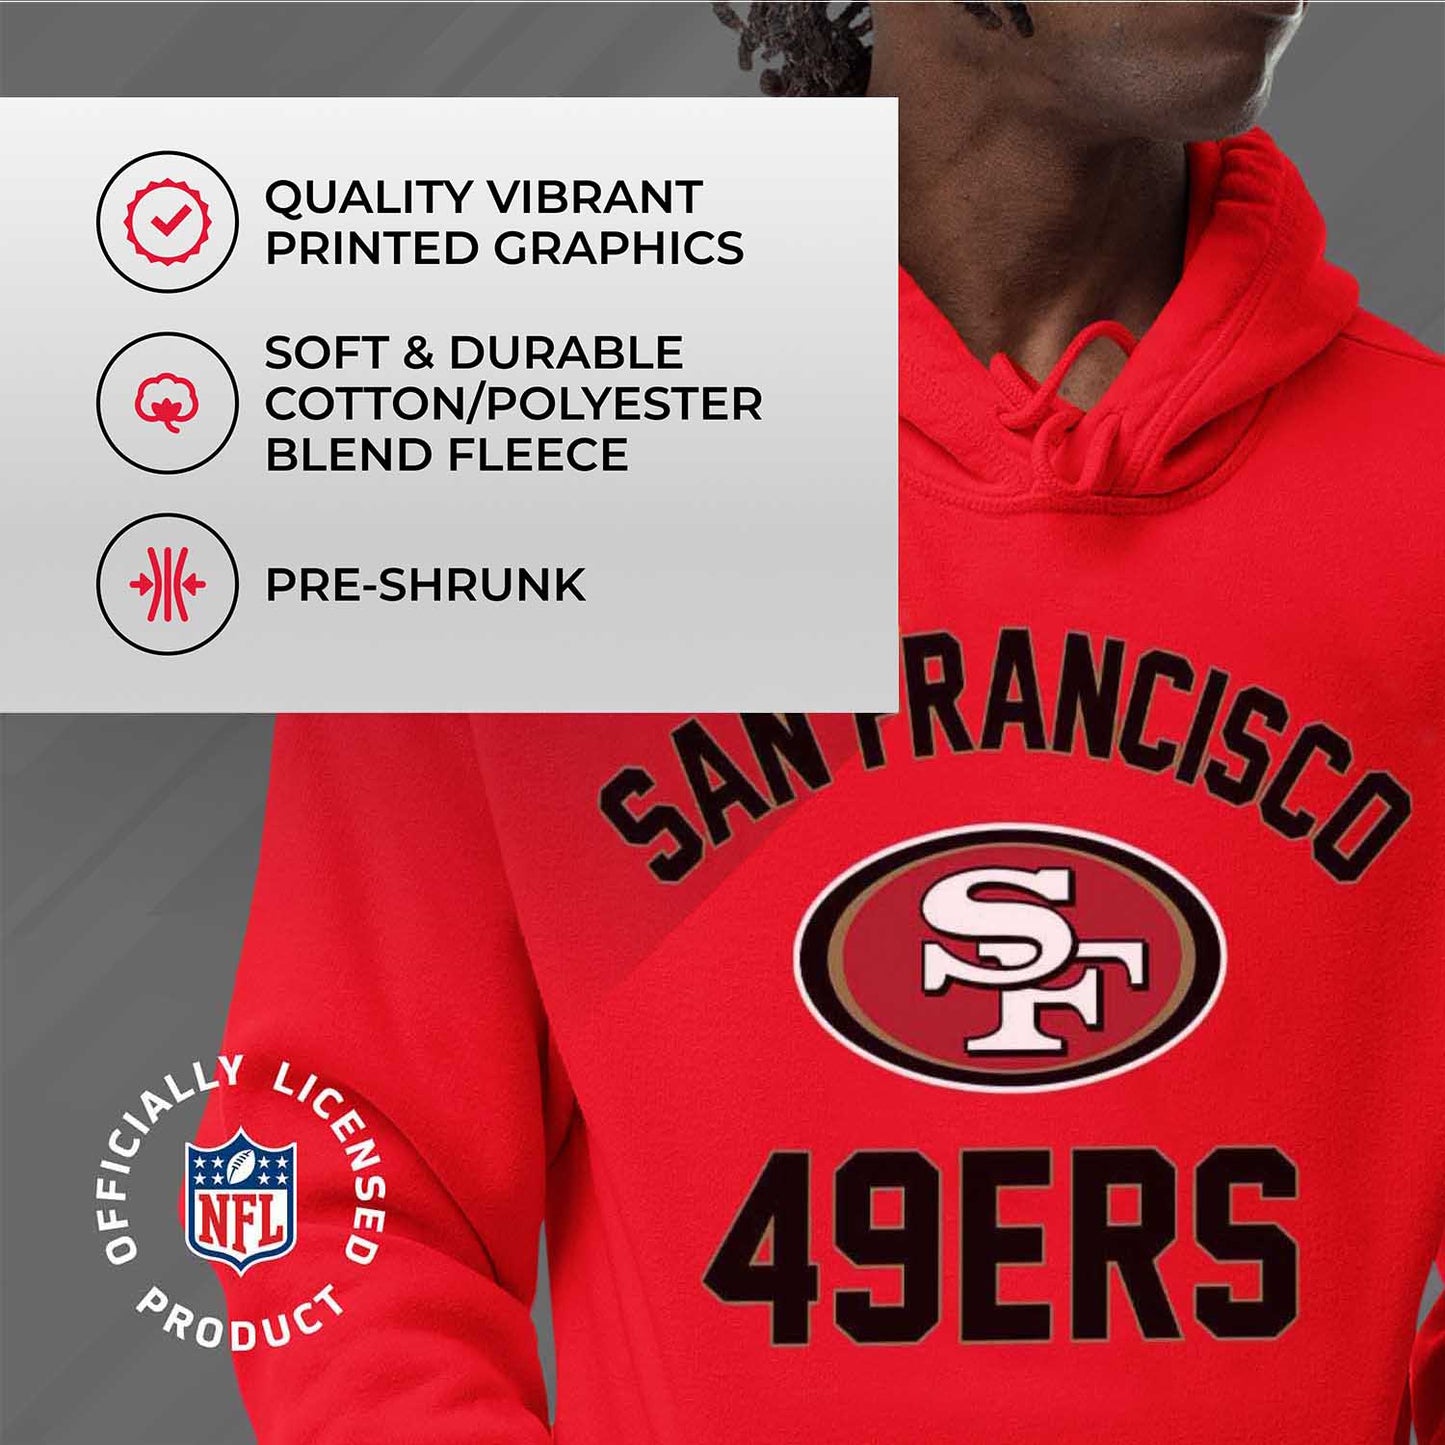 San Francisco 49ers NFL Adult Gameday Hooded Sweatshirt - Red